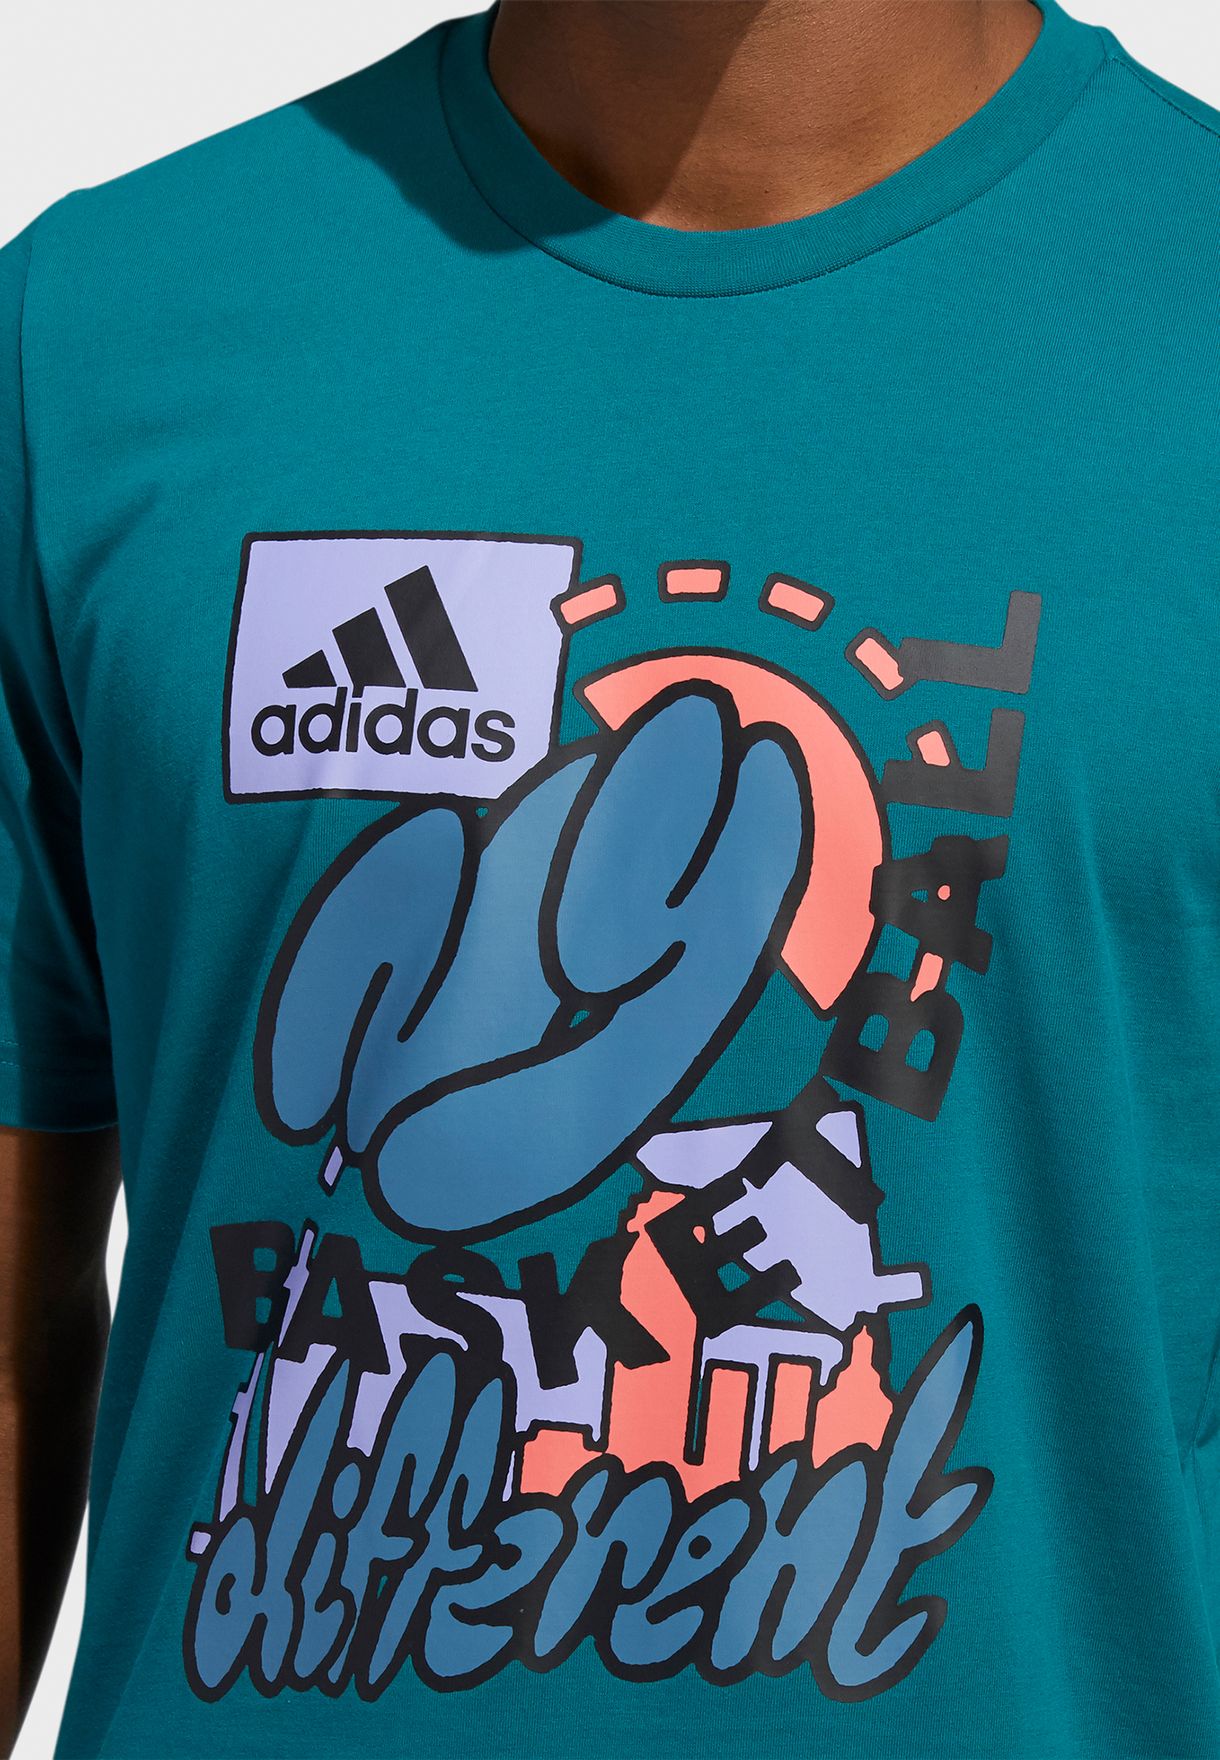 Ny Hoops Graphic T-Shirt